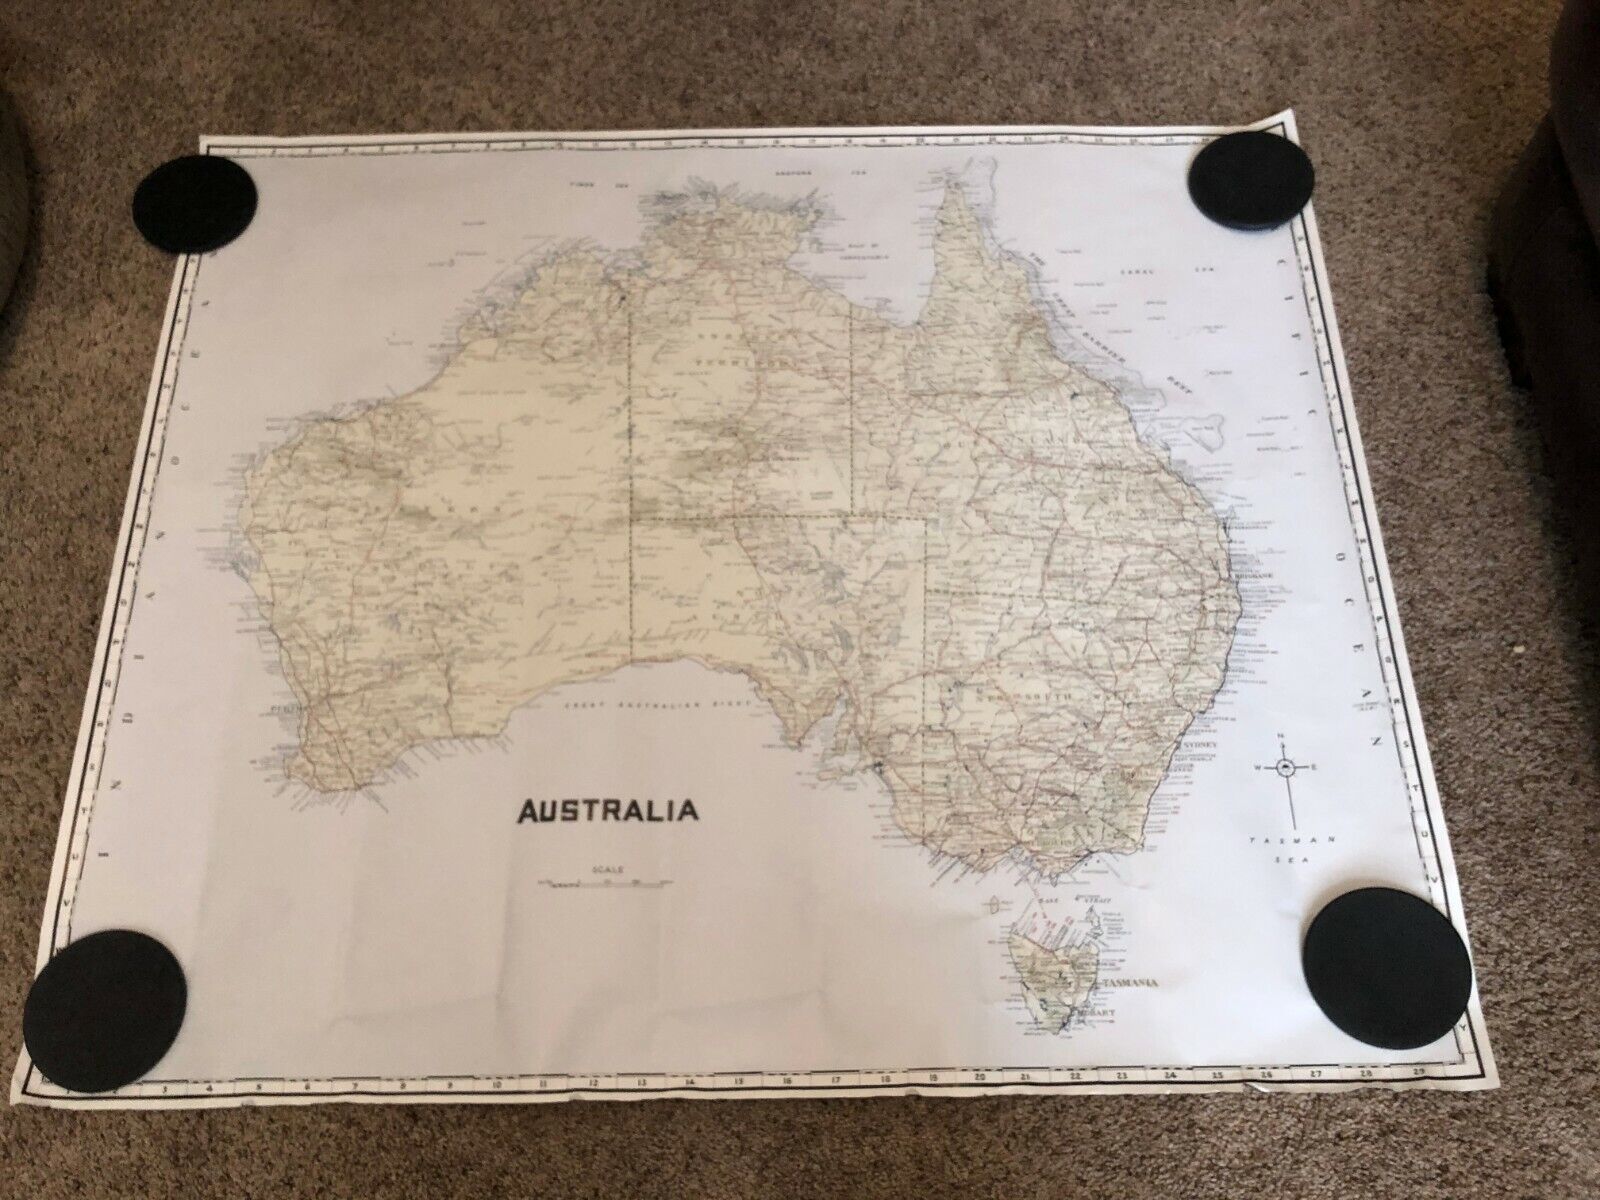 1996 Australia Poster Map - 36.5 x 30.5 inches